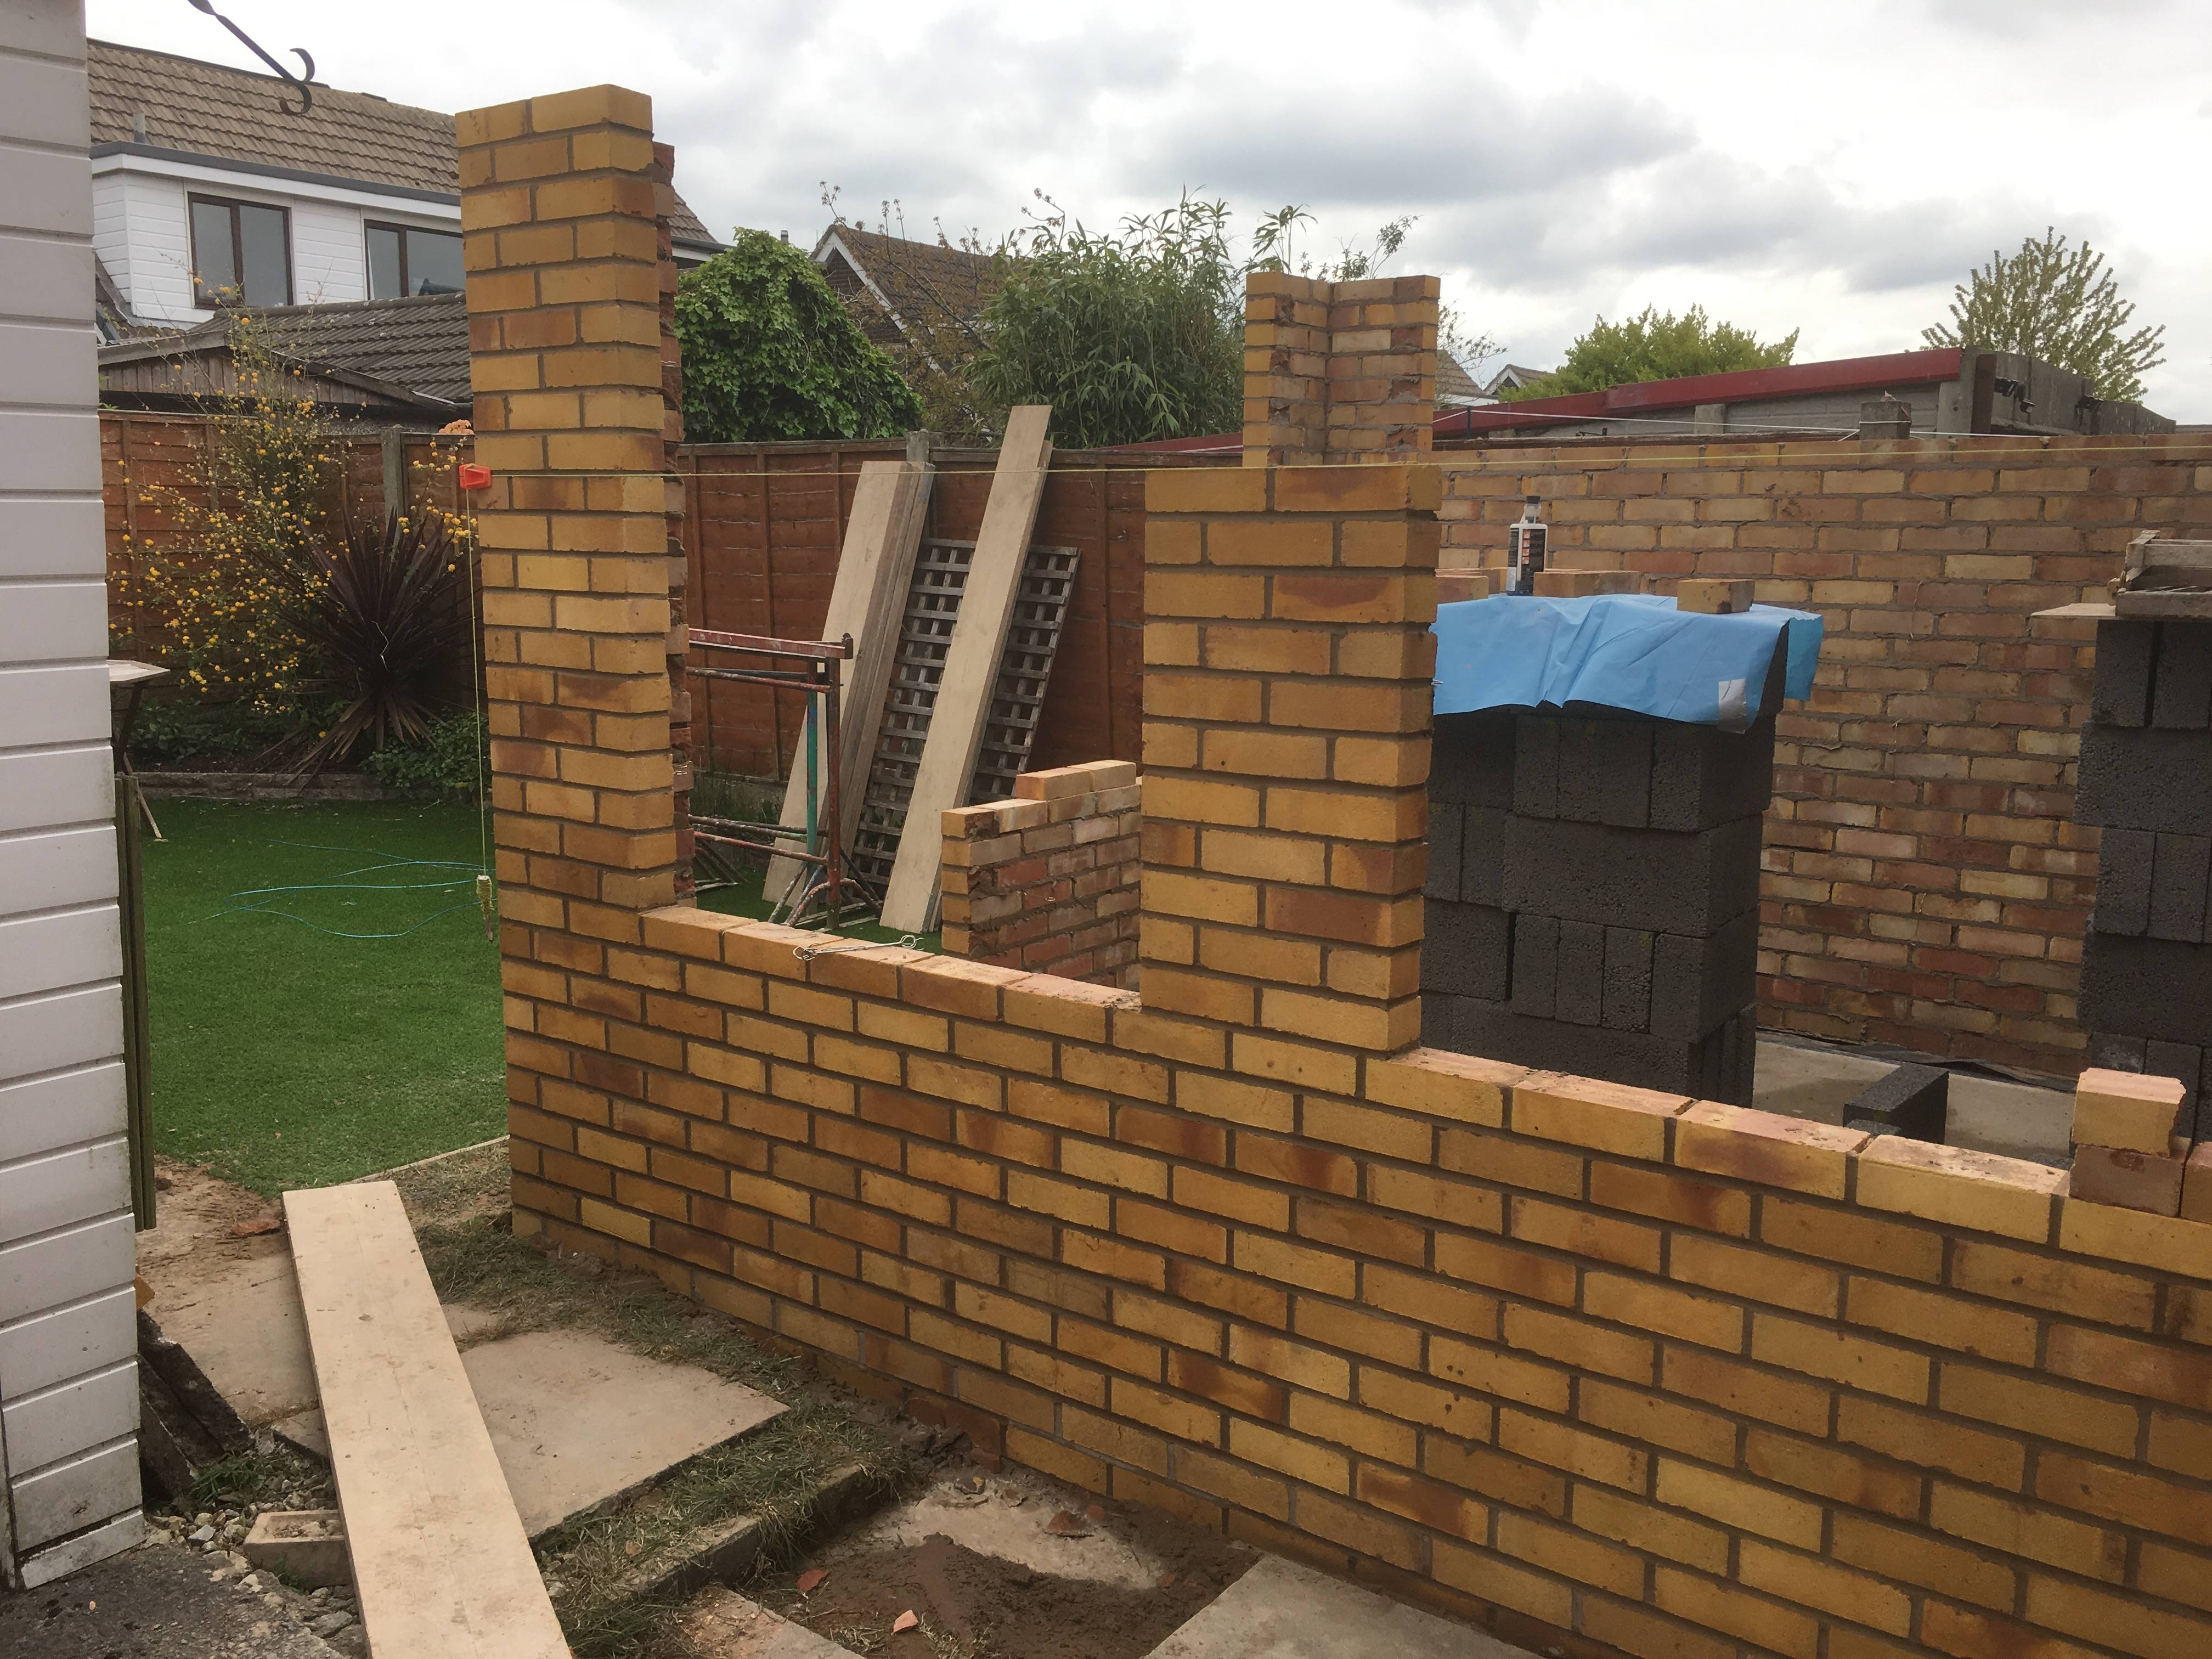 Brickwork almost done